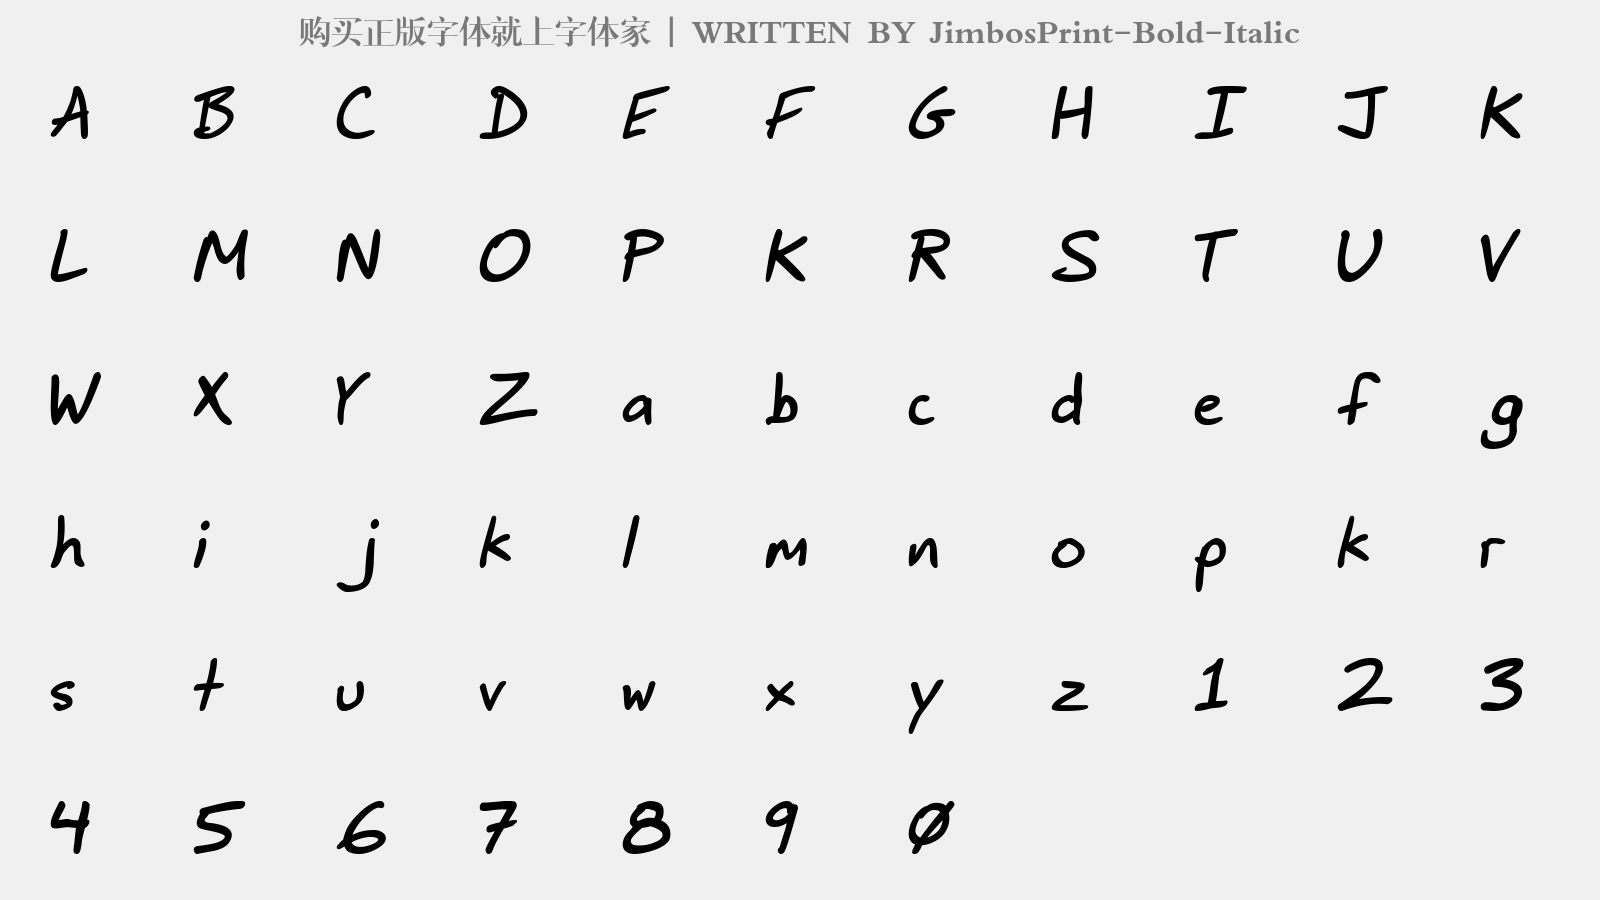 JimbosPrint-Bold-Italic - 大写字母/小写字母/数字